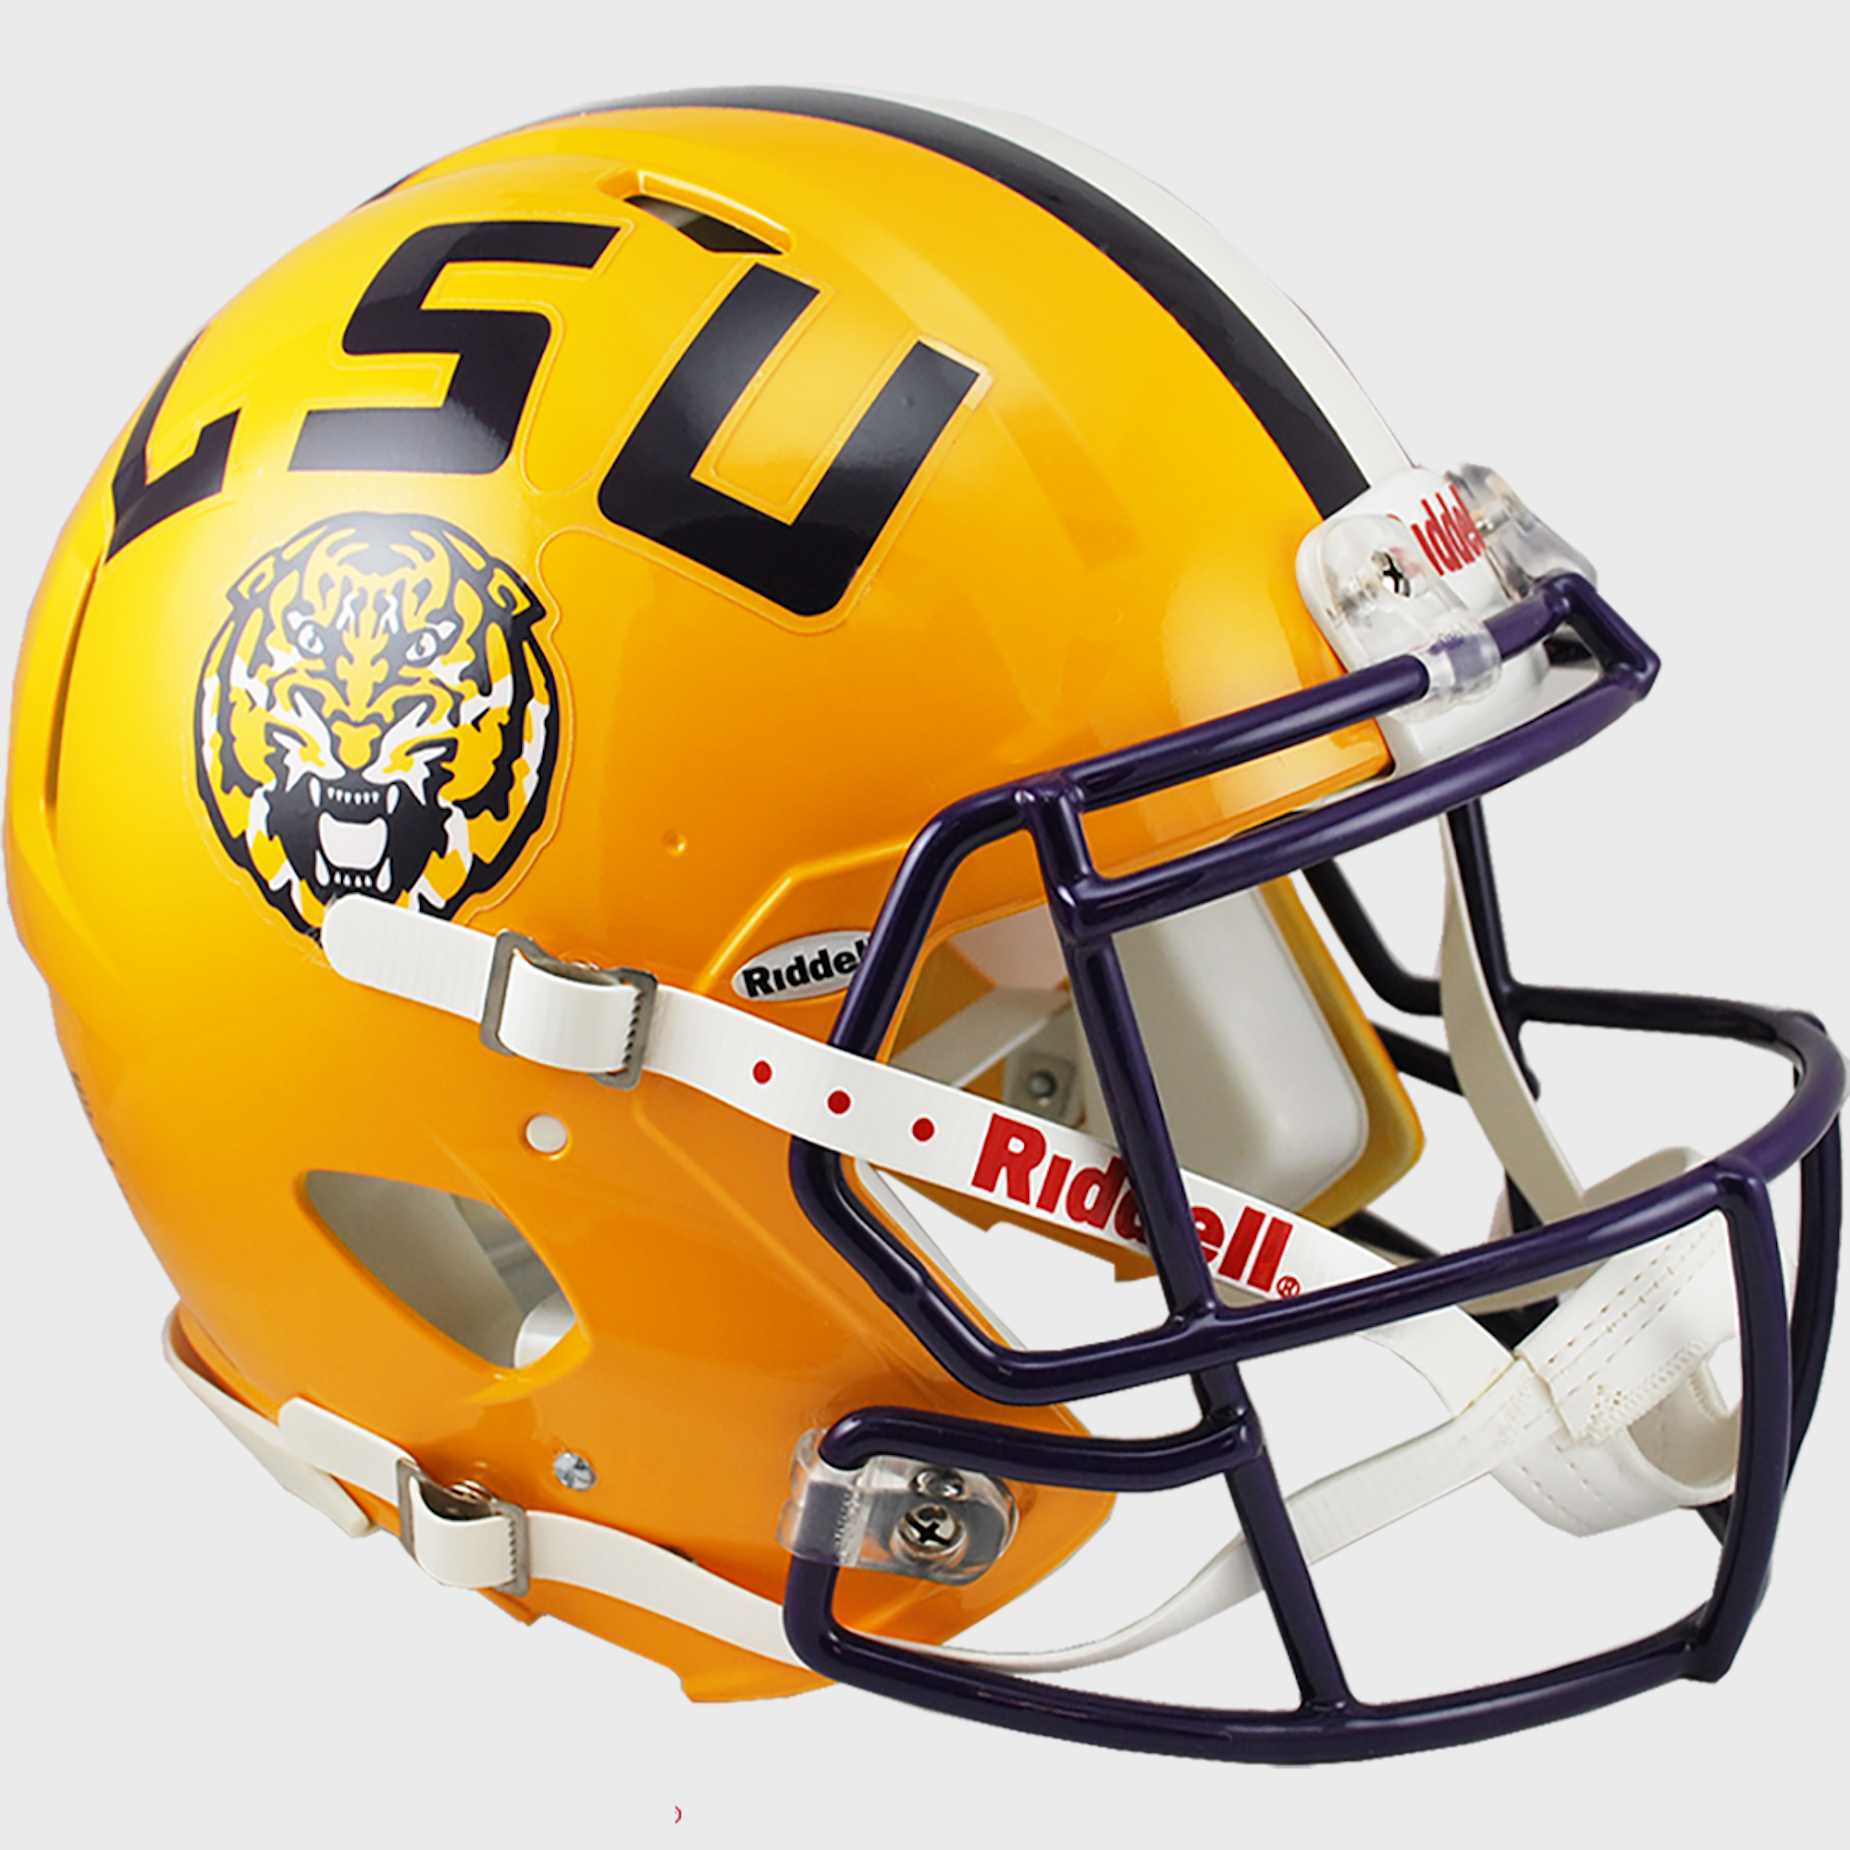 LSU Tigers authentic full size helmet